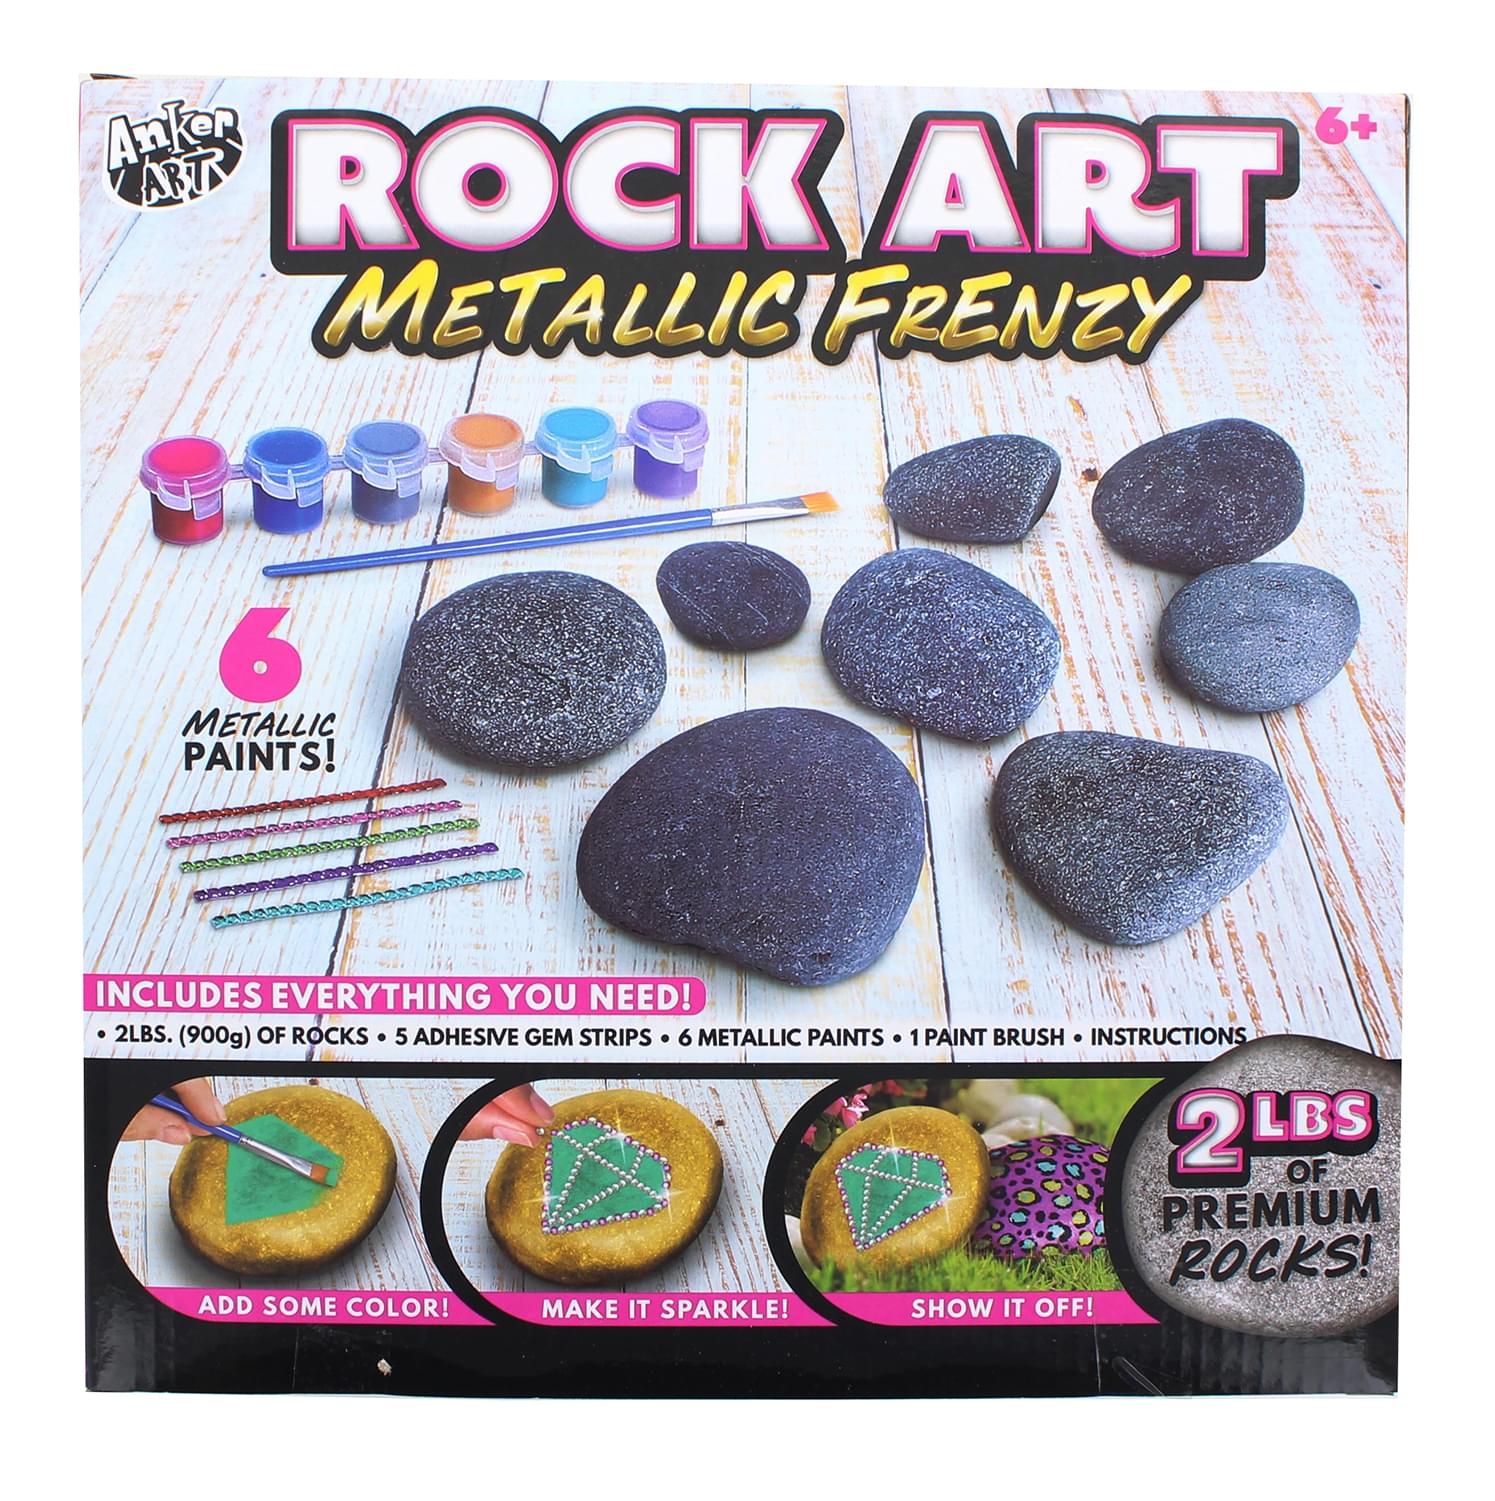 Rock Art Metallic Frenzy DIY Craft Kit | Includes 2 lbs of Premium Rock